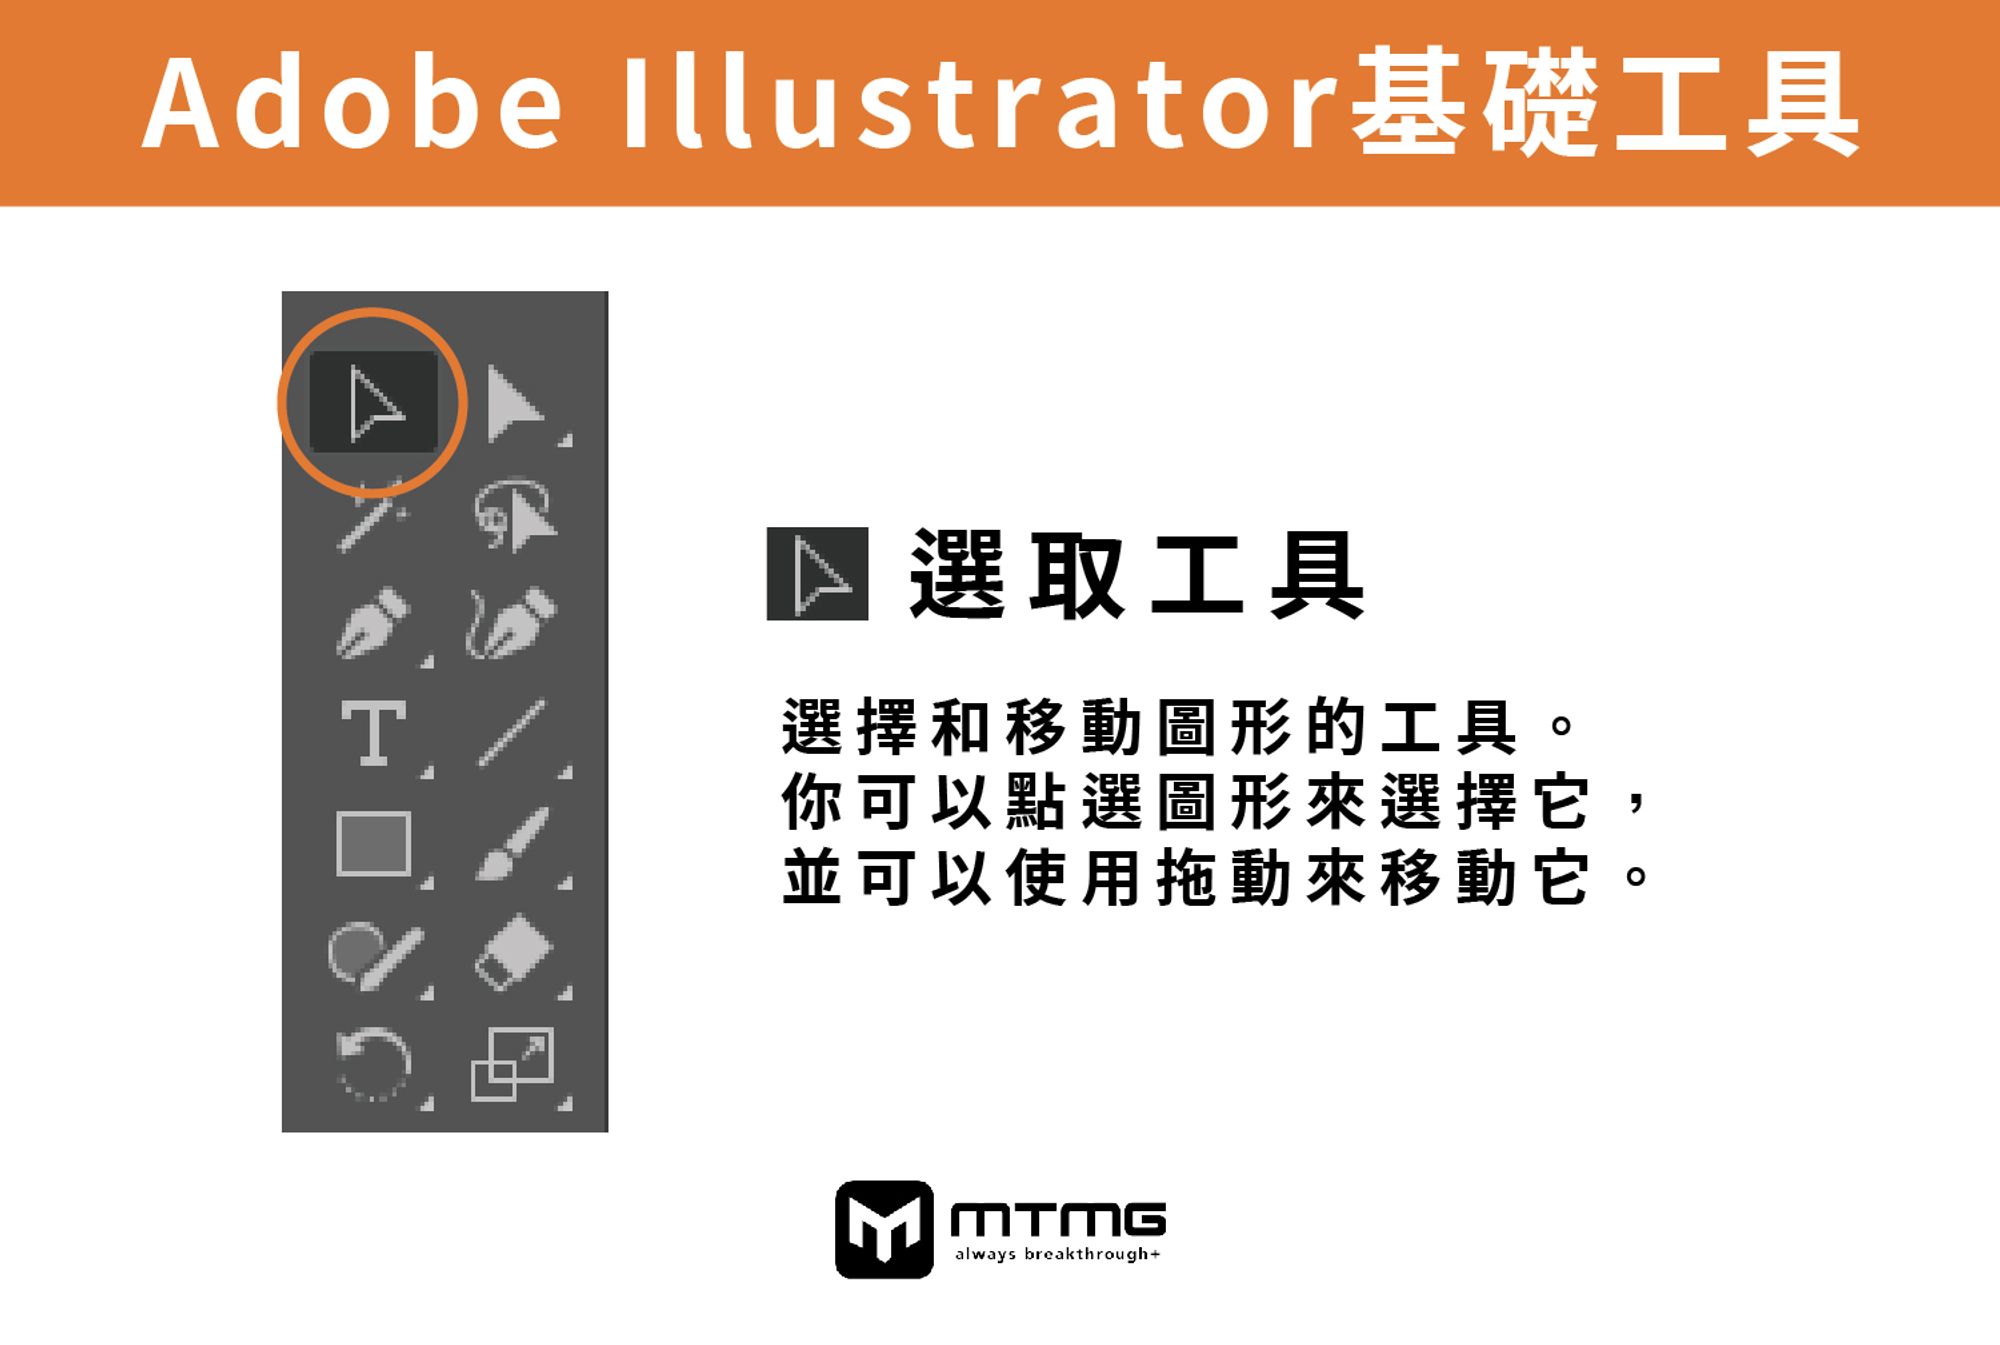 Adobe Illustrator 選取工具